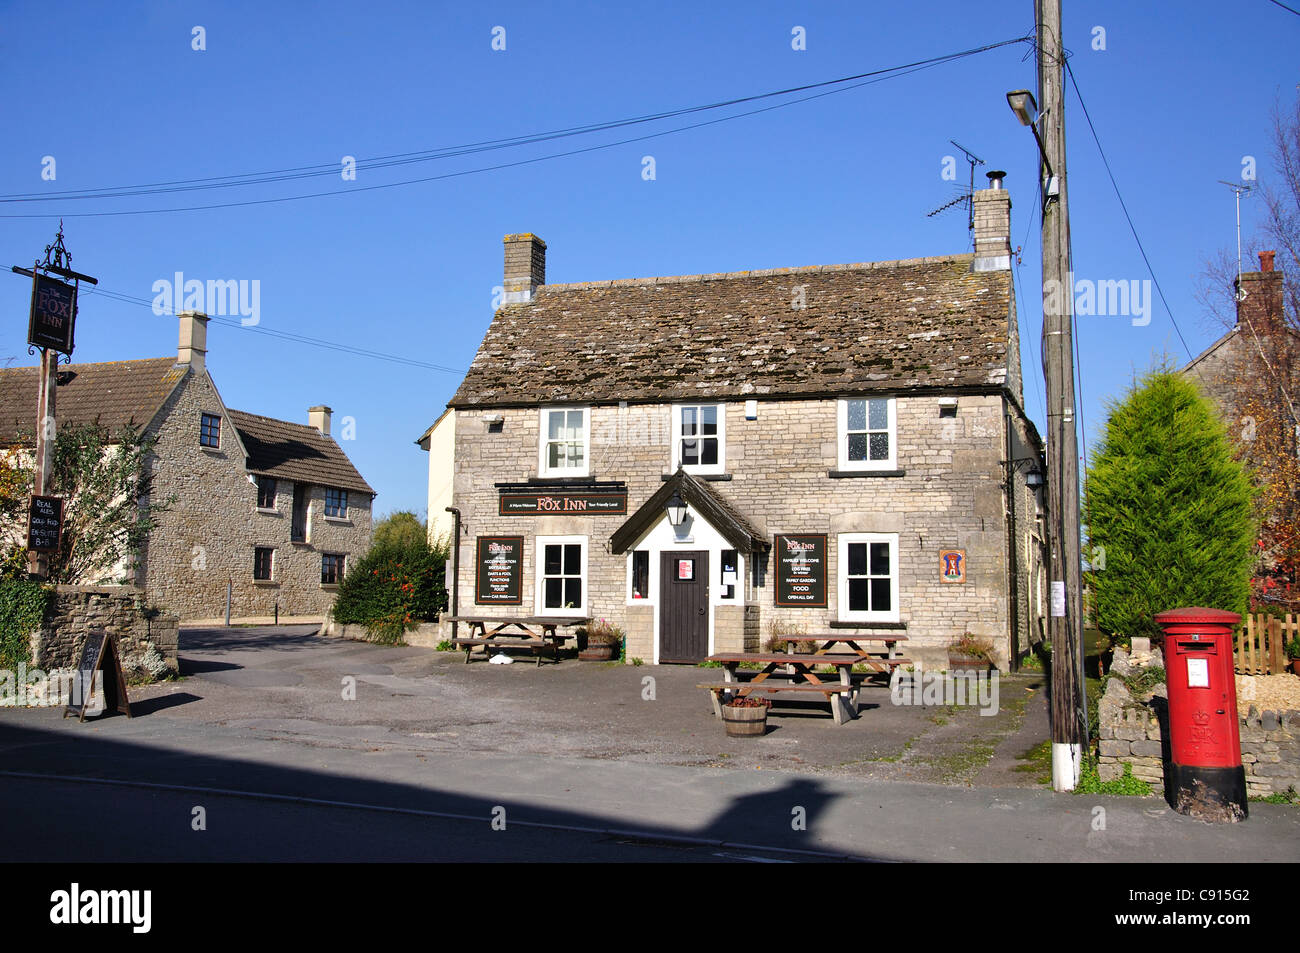 The Fox Inn, High Street, Hawkesbury Upton, Gloucestershire, England, United Kingdom Stock Photo